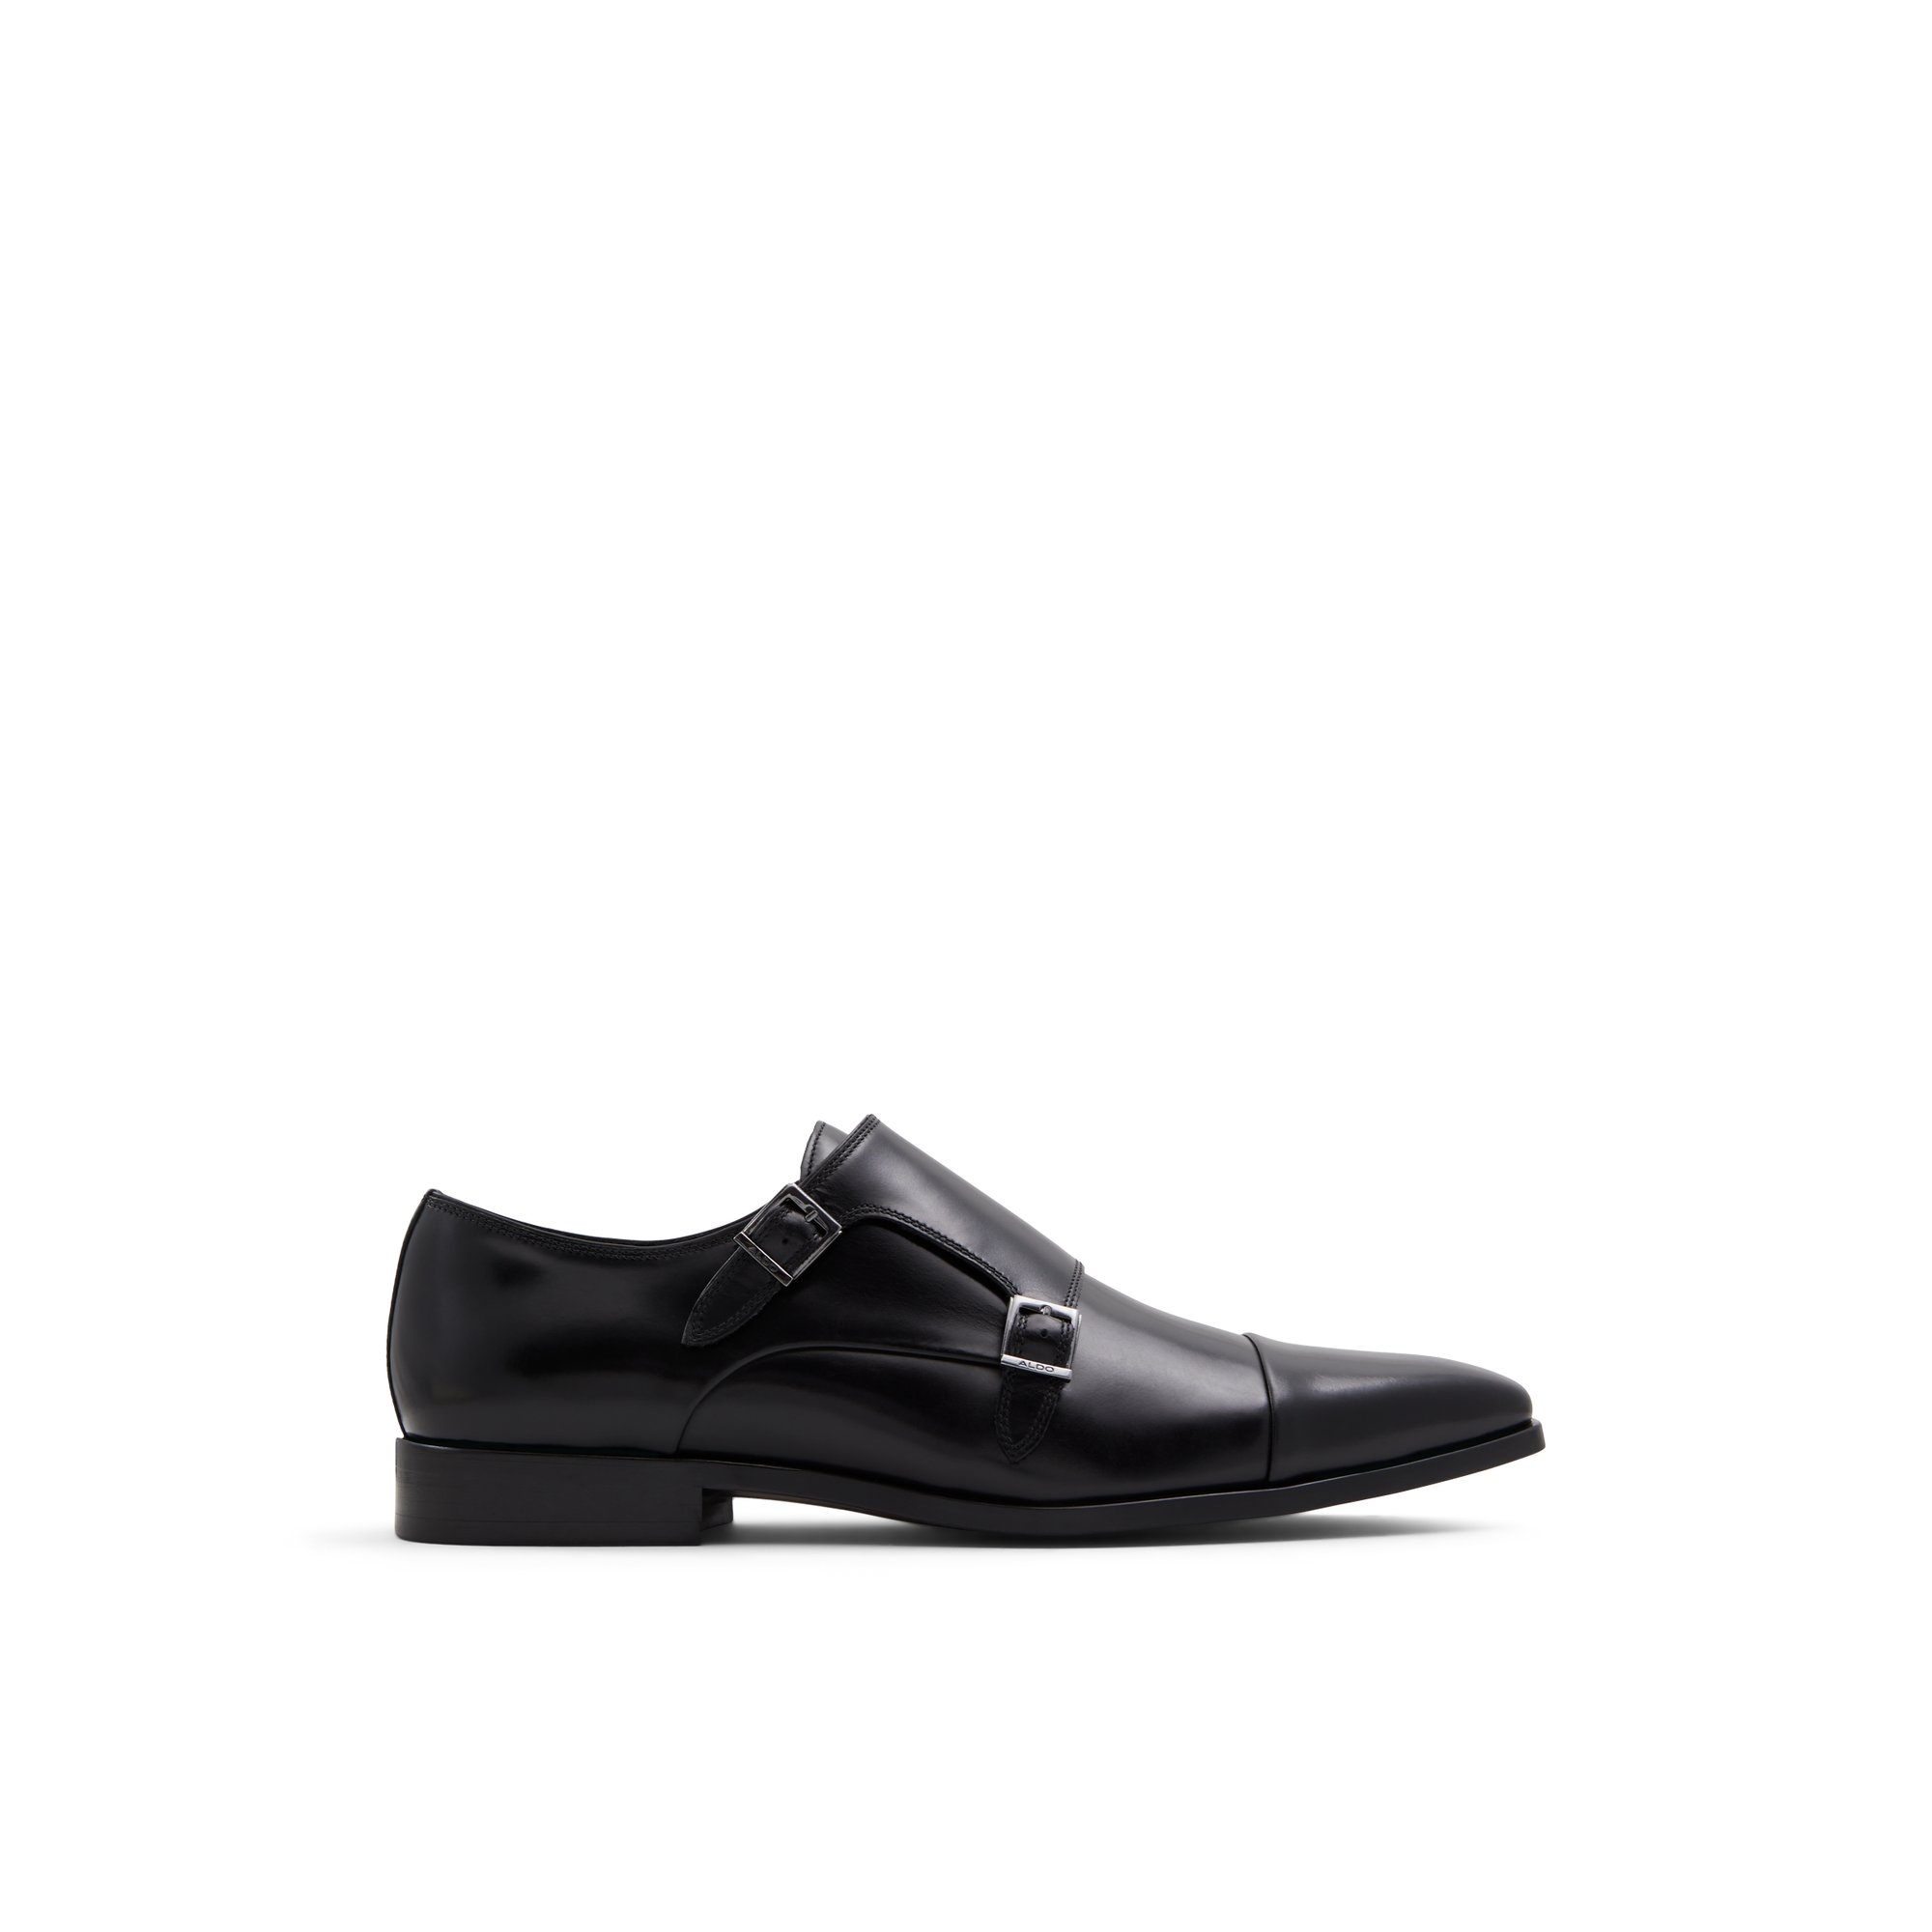 ALDO Windward - Men's Loafers and Slip on - Black